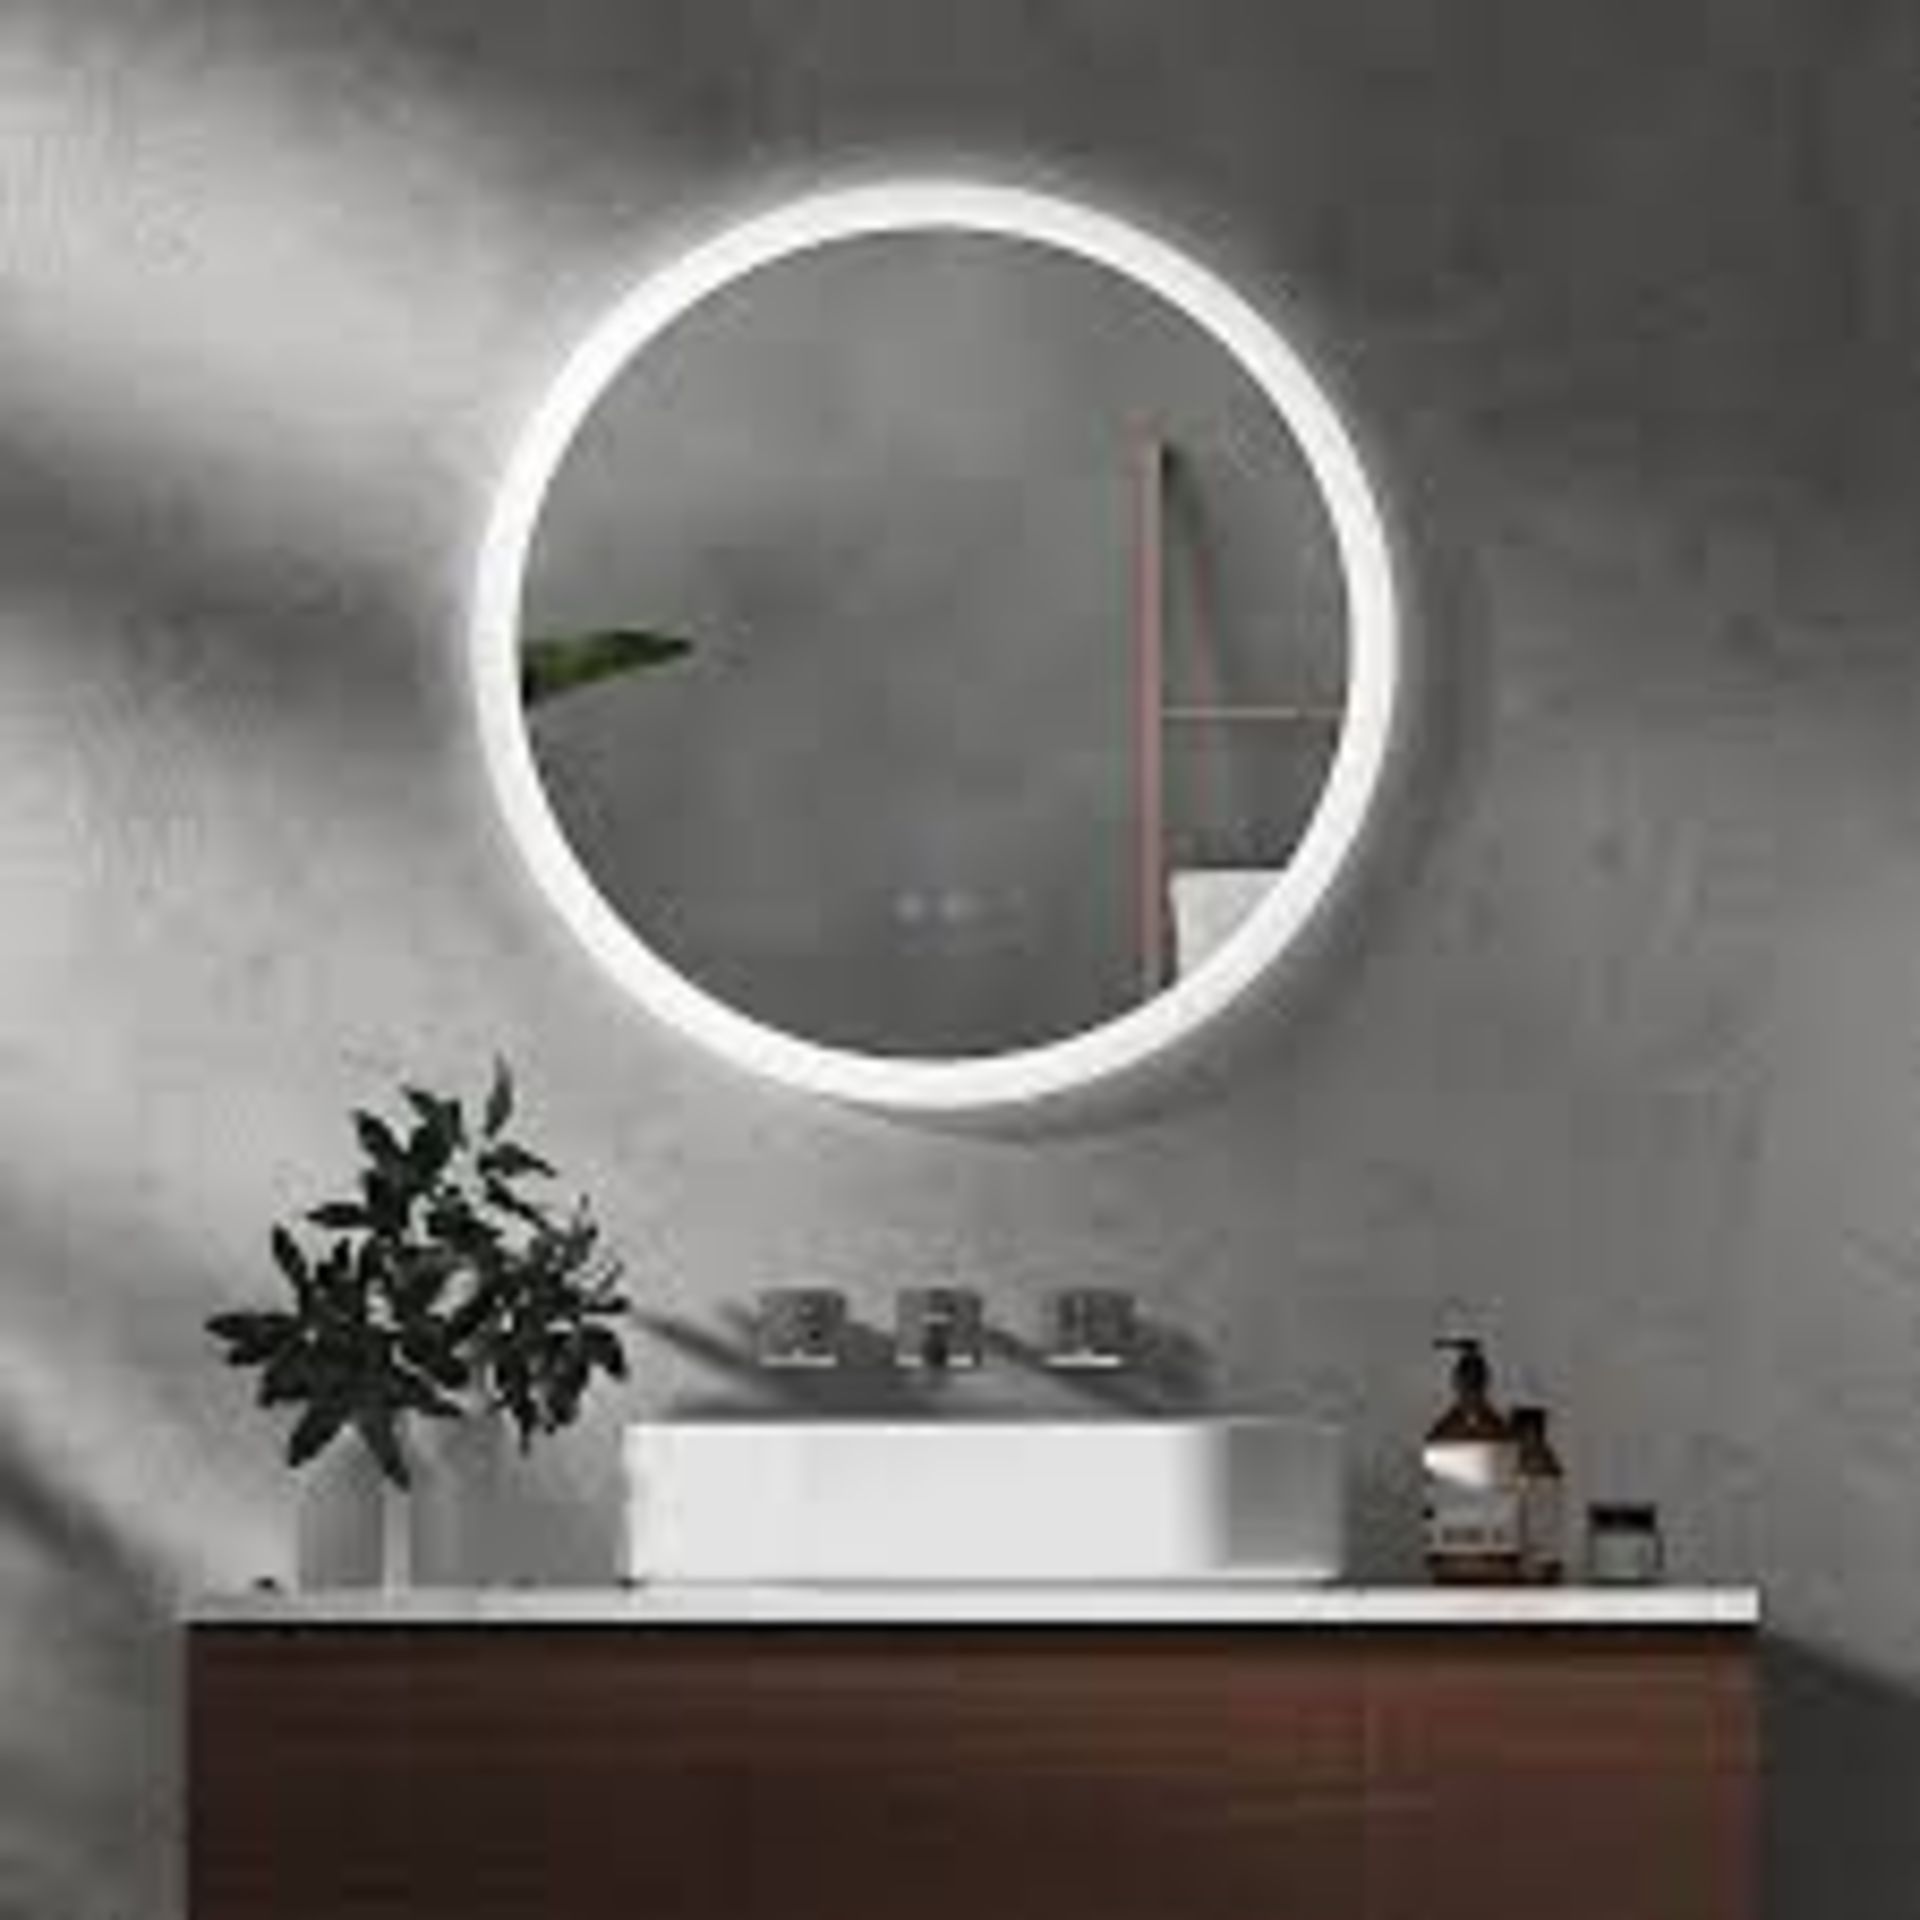 kleankin Illuminated Bathroom Mirror with LED Lights. - R14.11. Running a bright ring around